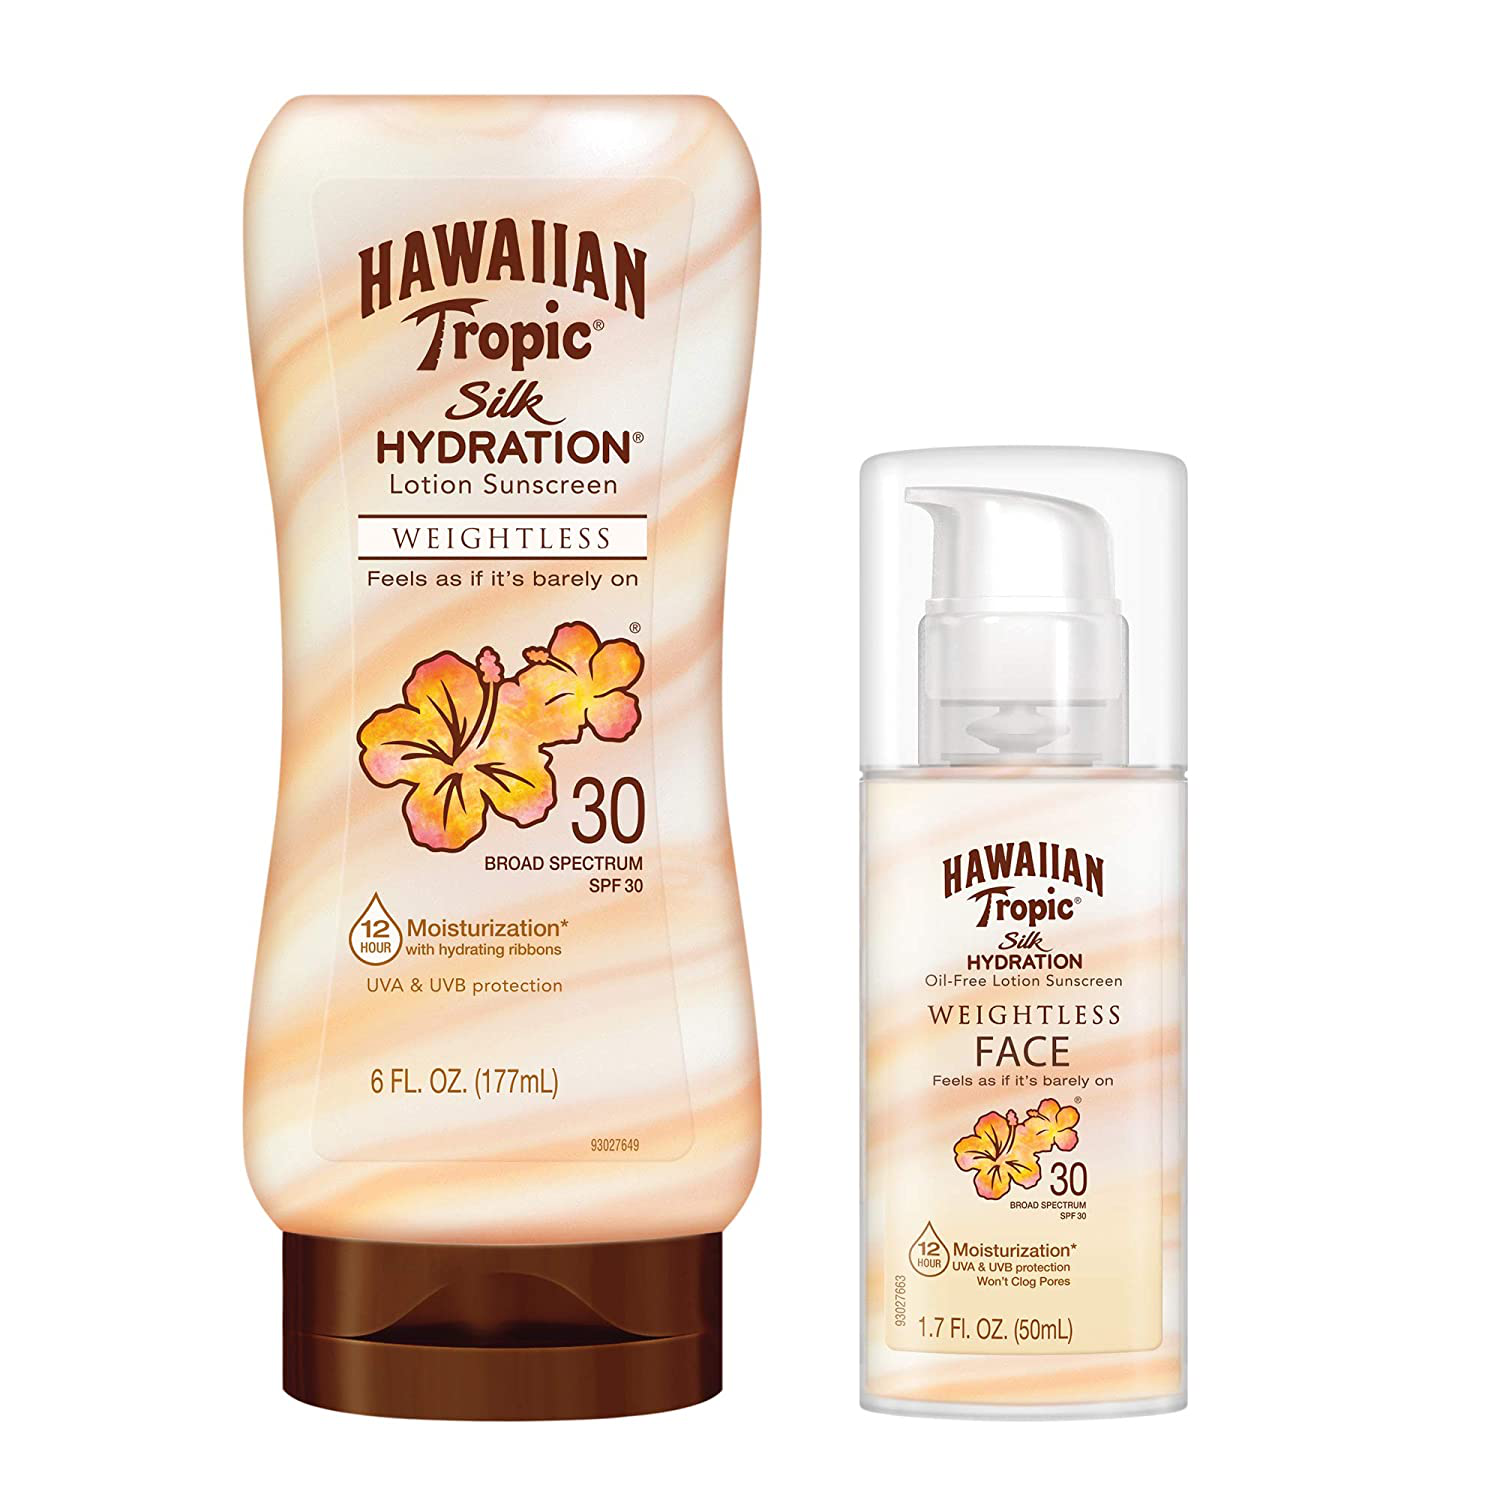 Hawaiian Tropic SPF 30 Broad Spectrum Sunscreen, Silk Hydration Weightless Moisturizing Sunscreen Lotion, 6 Fl Oz, Twin Pack